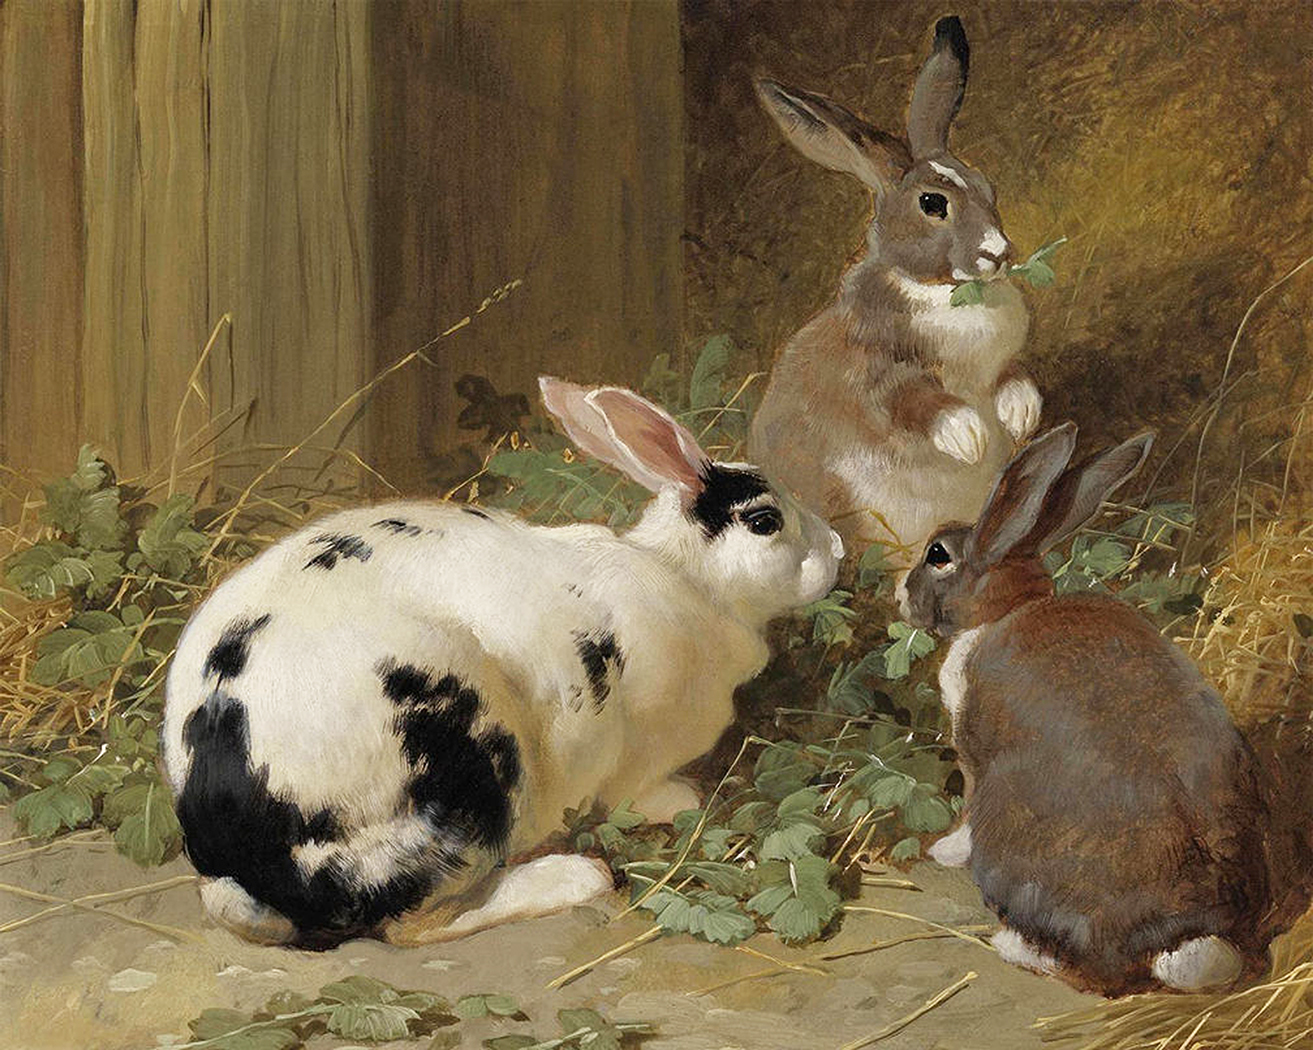 Farm/Pastoral Barnyard Three Rabbits Framed Oil Painting Print on Canvas